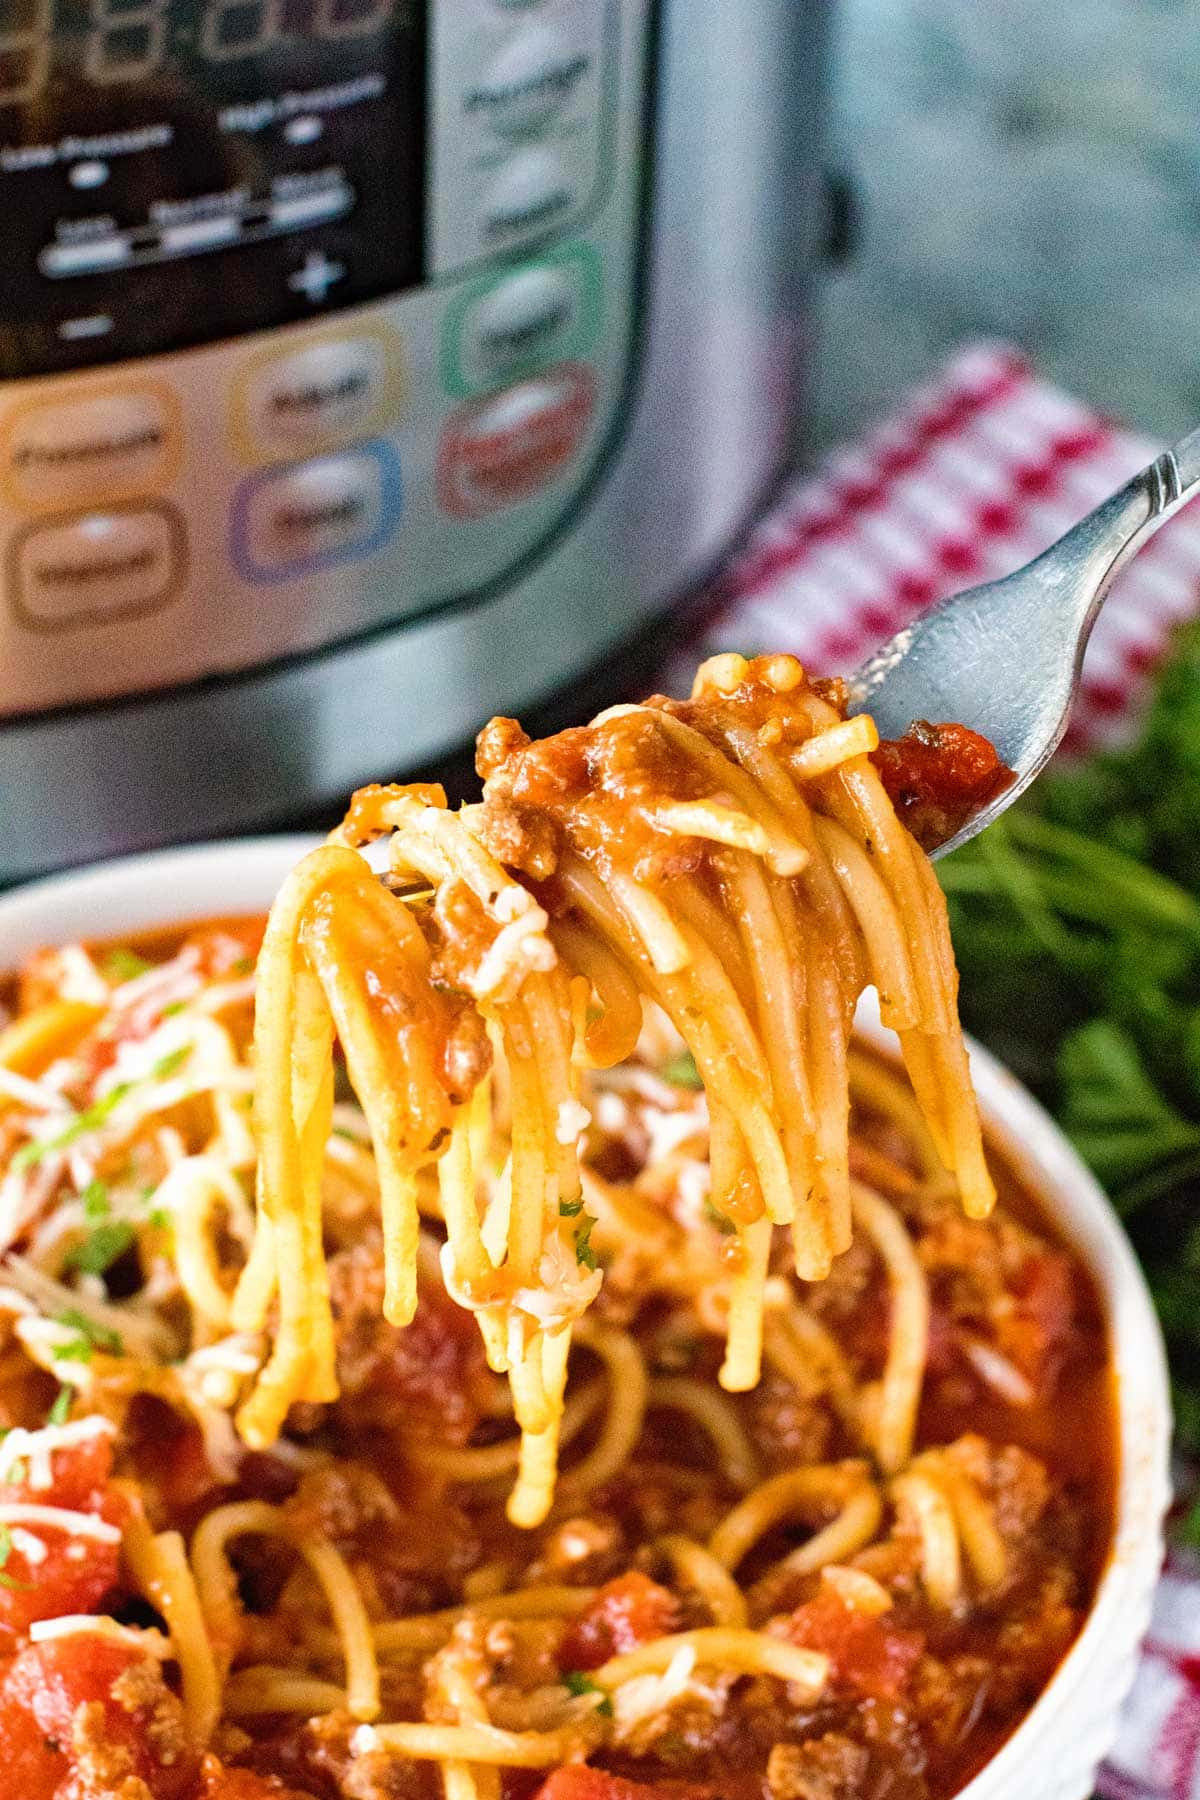 Instant Pot Recipes Spaghetti
 Instant Pot Pressure Cooker Spaghetti Julie s Eats